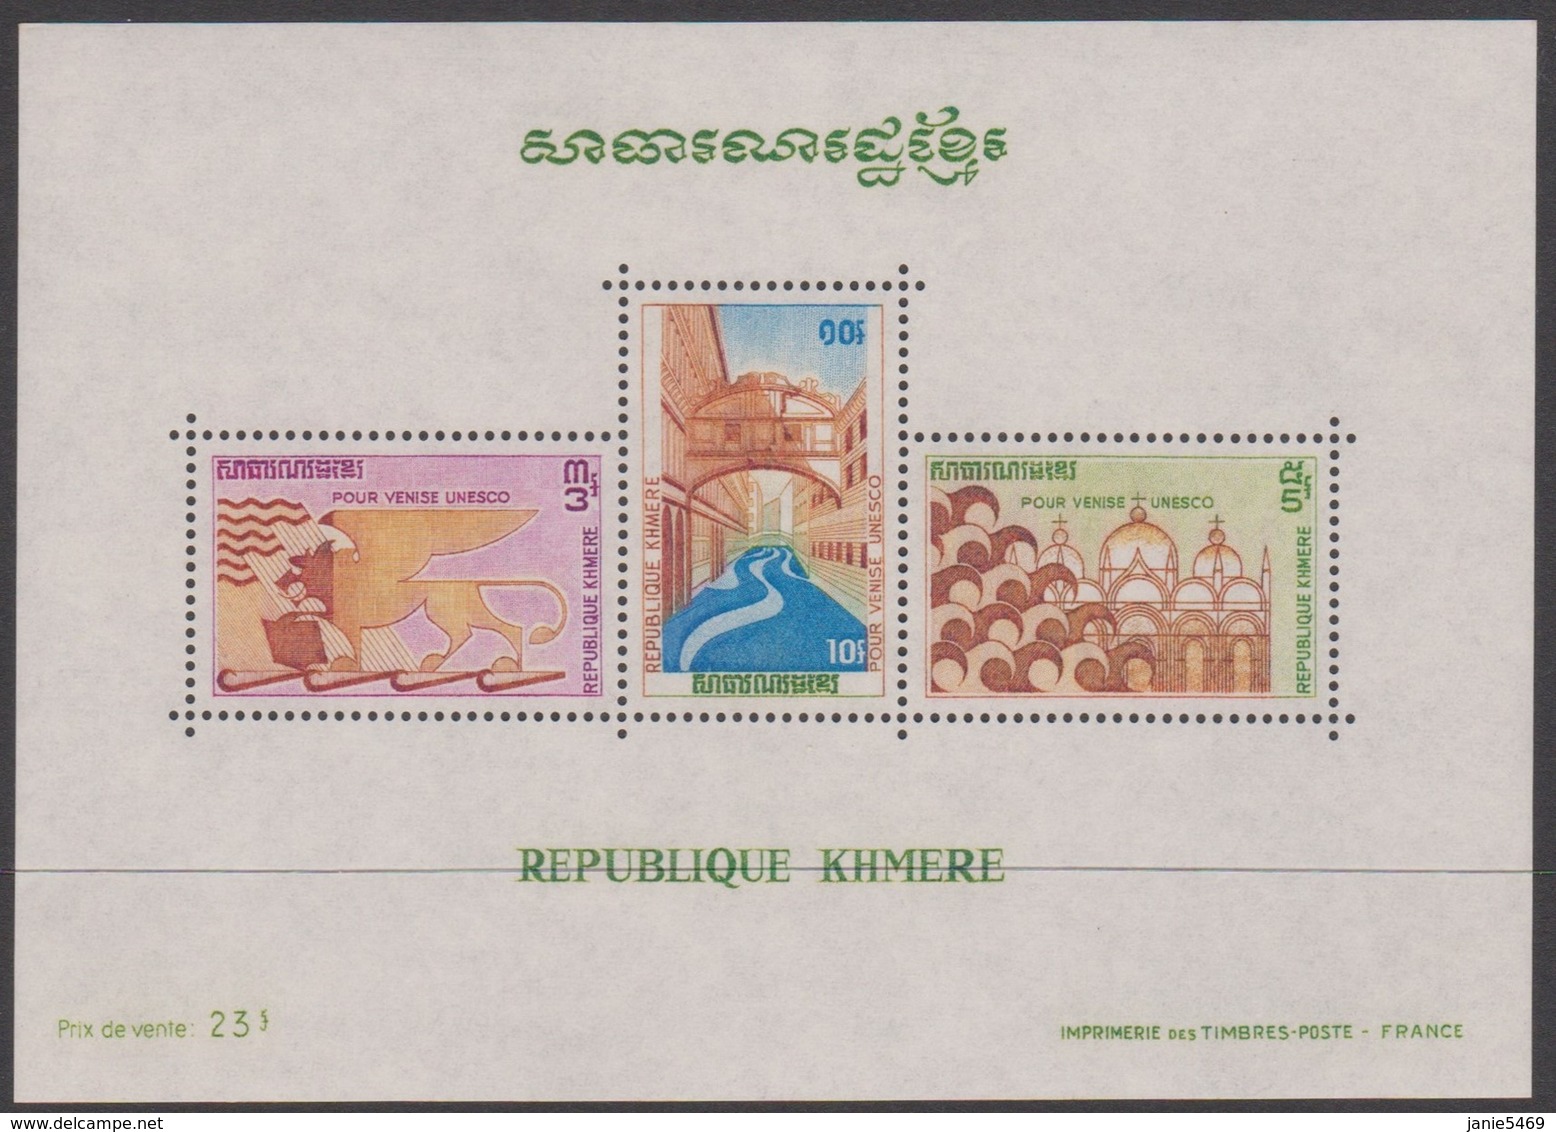 Cambodia Scott 277a Save Venice, Souvenir Sheet, Mint Never Hinged - Cambodja